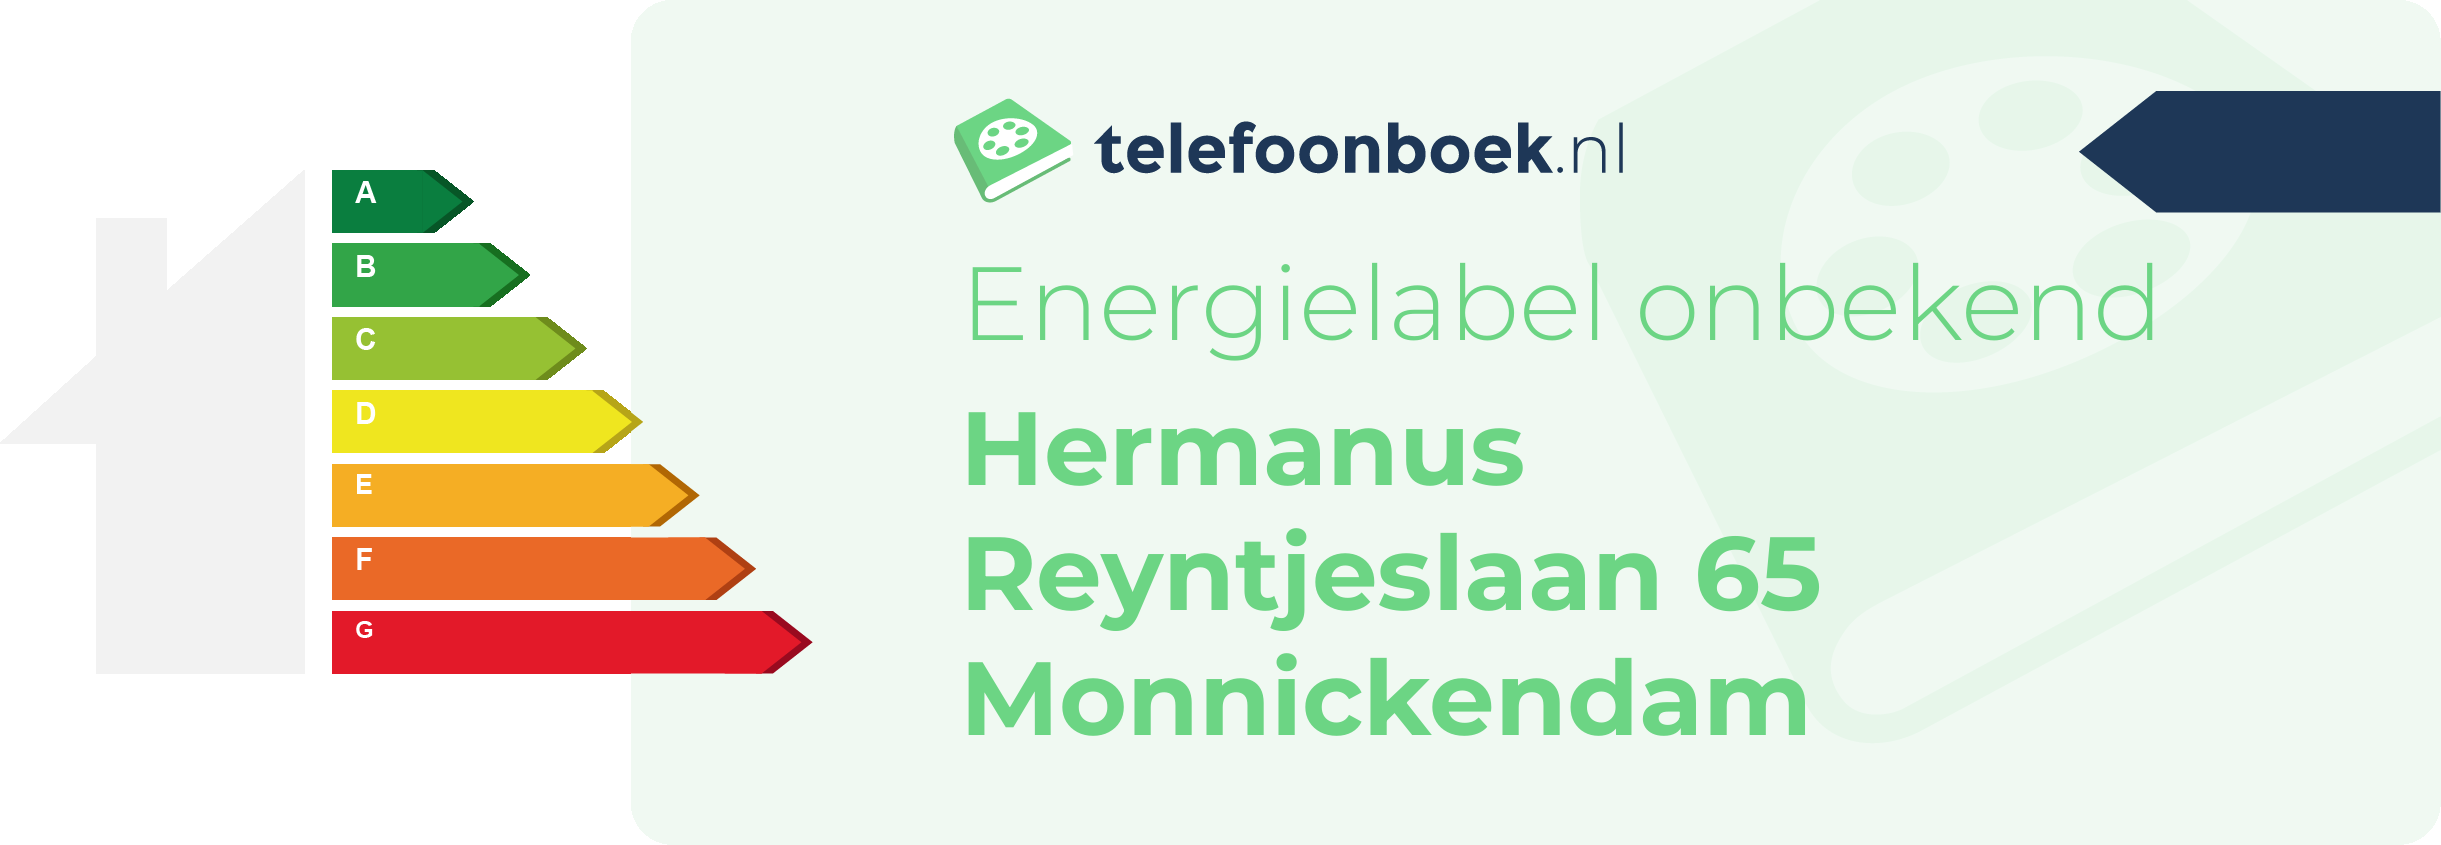 Energielabel Hermanus Reyntjeslaan 65 Monnickendam